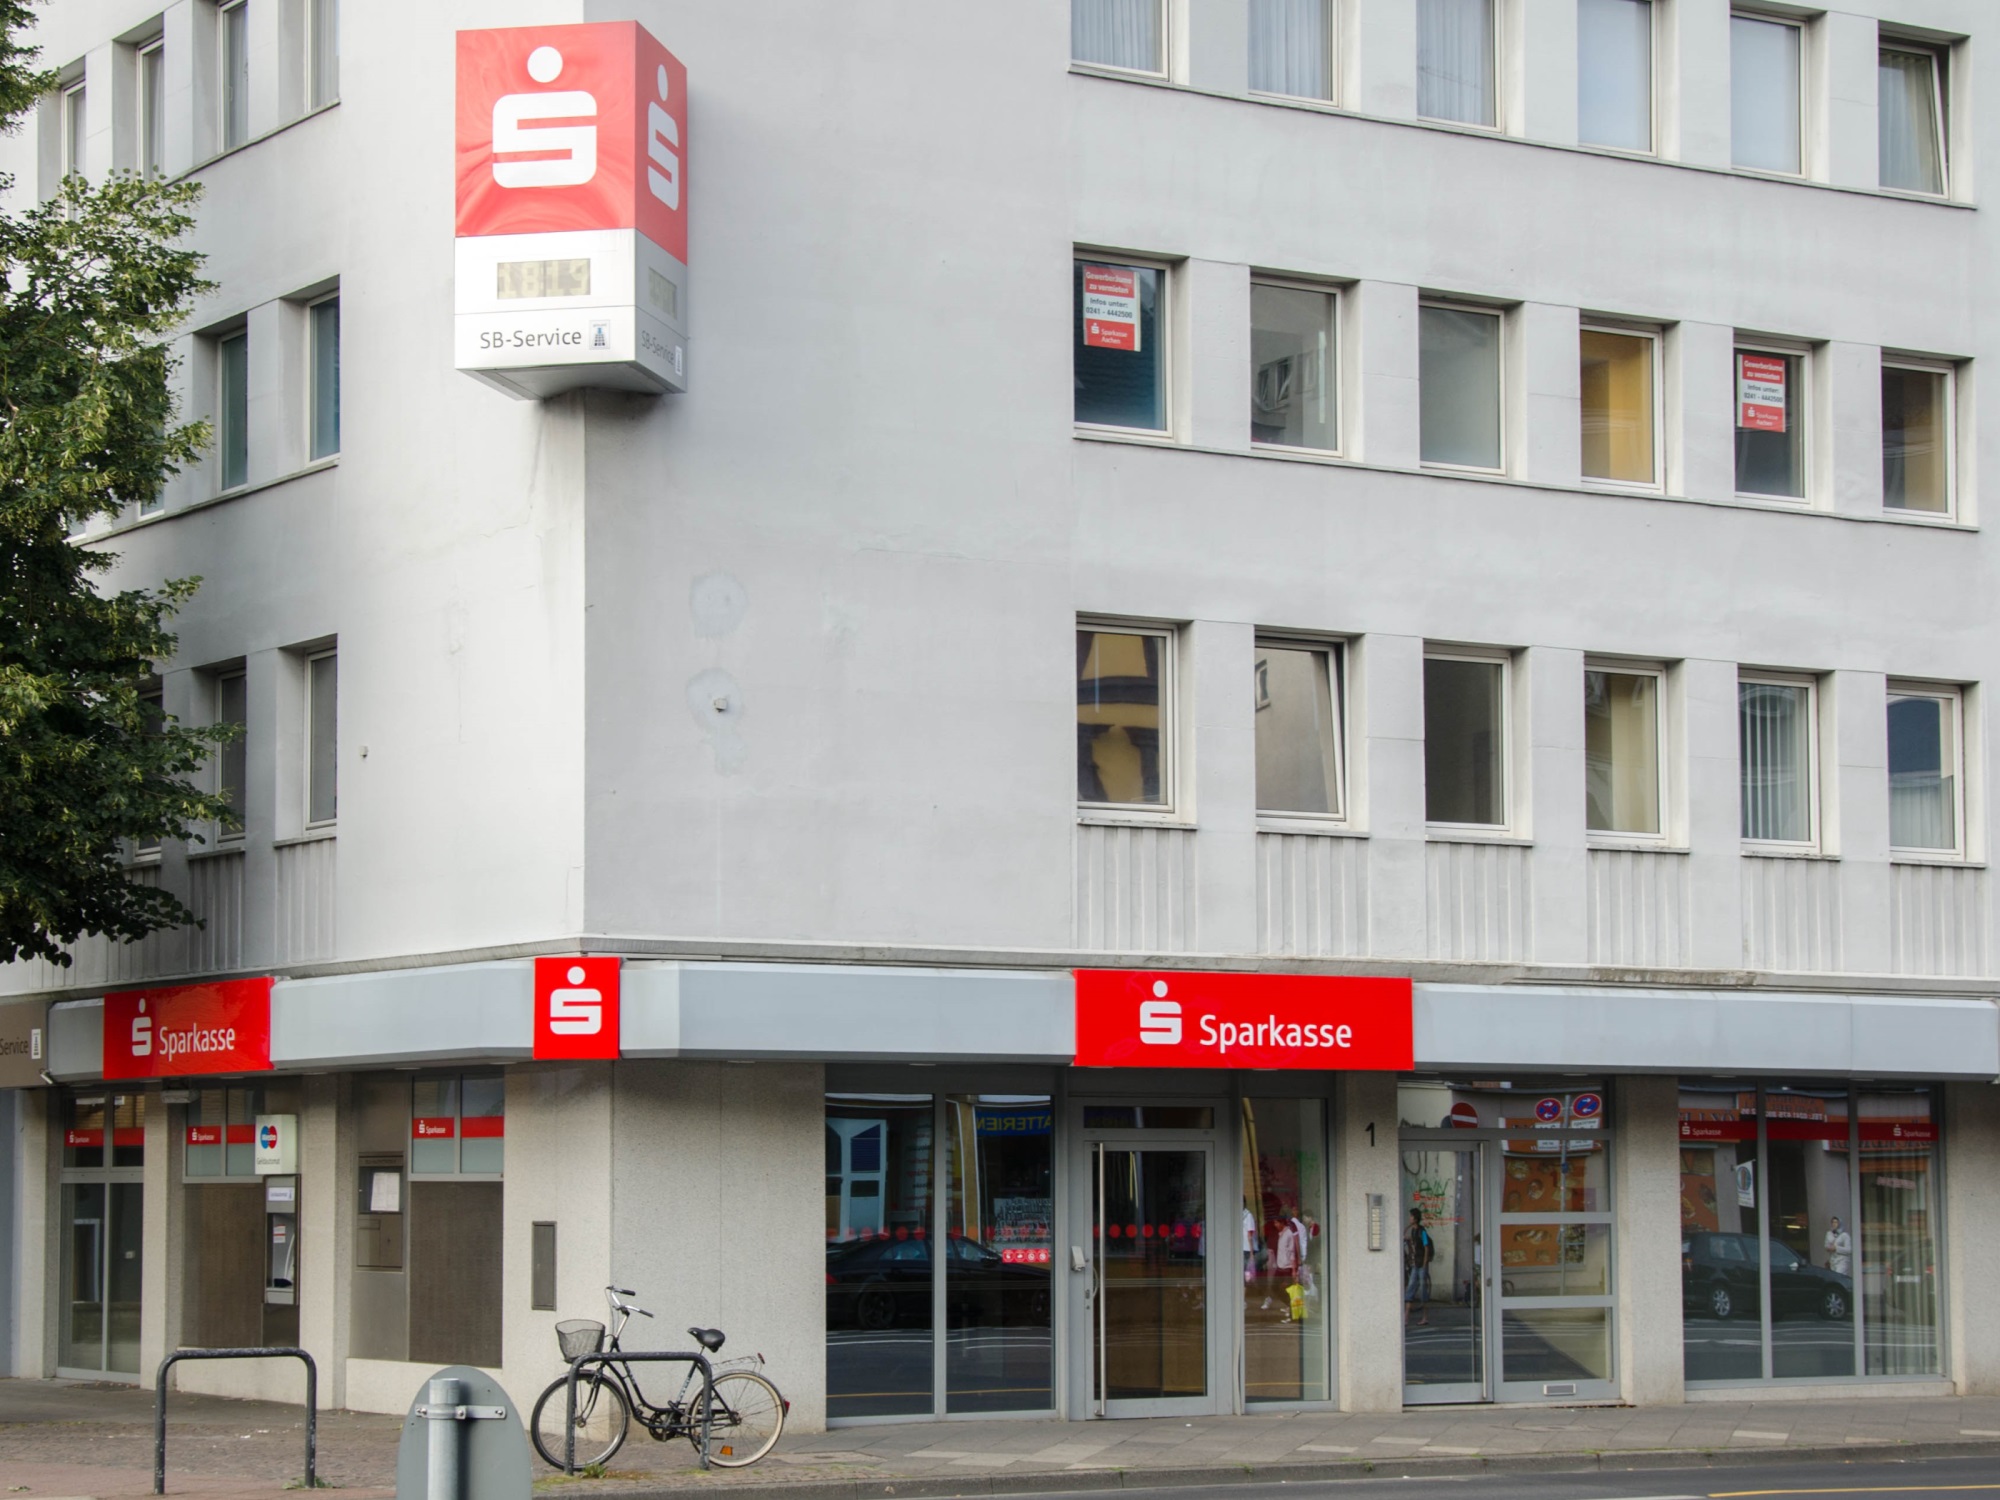 Sparkasse Geldautomat Kaiserplatz